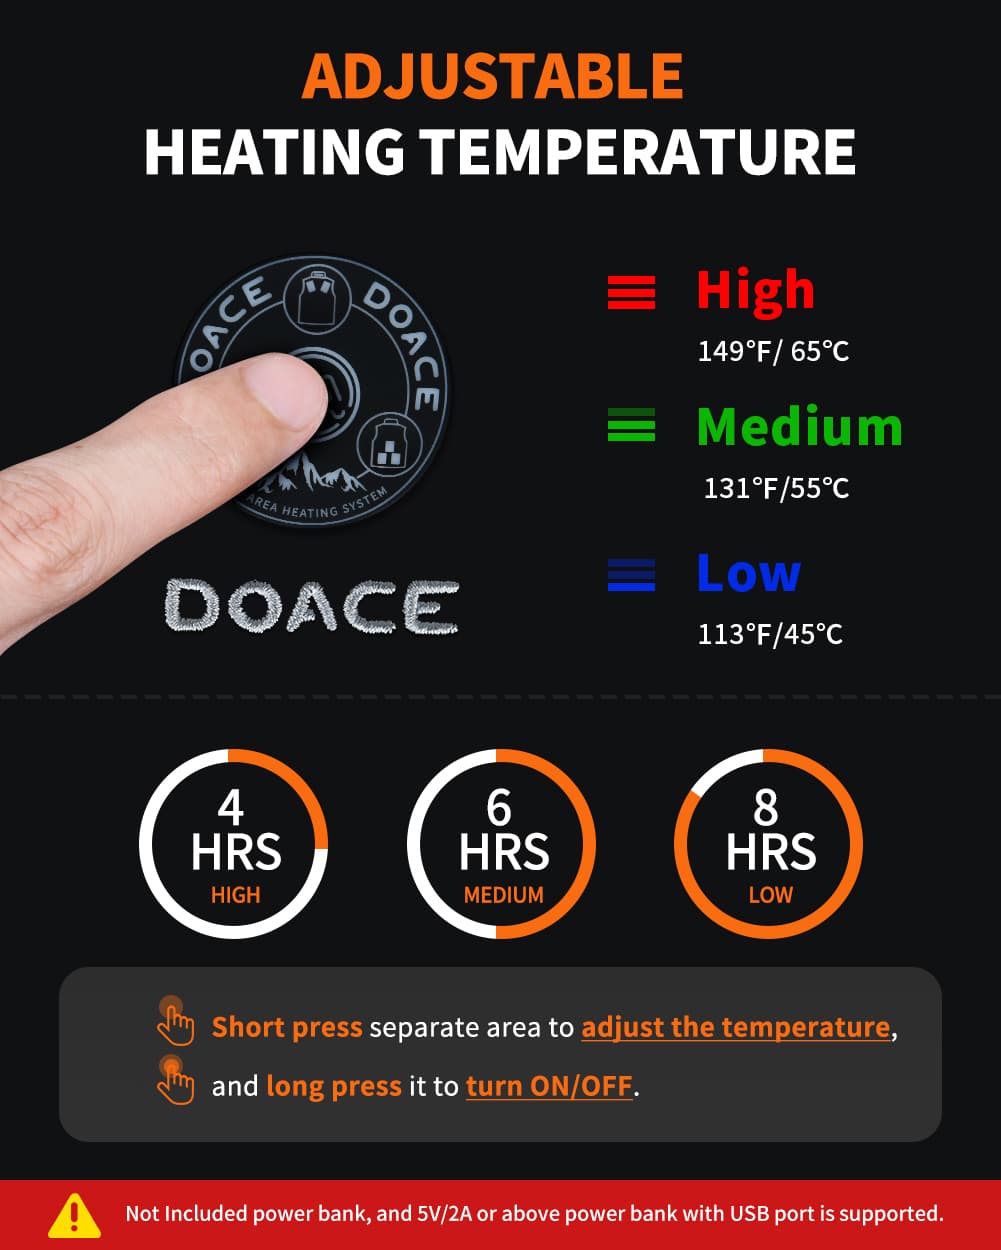 3 heating settings